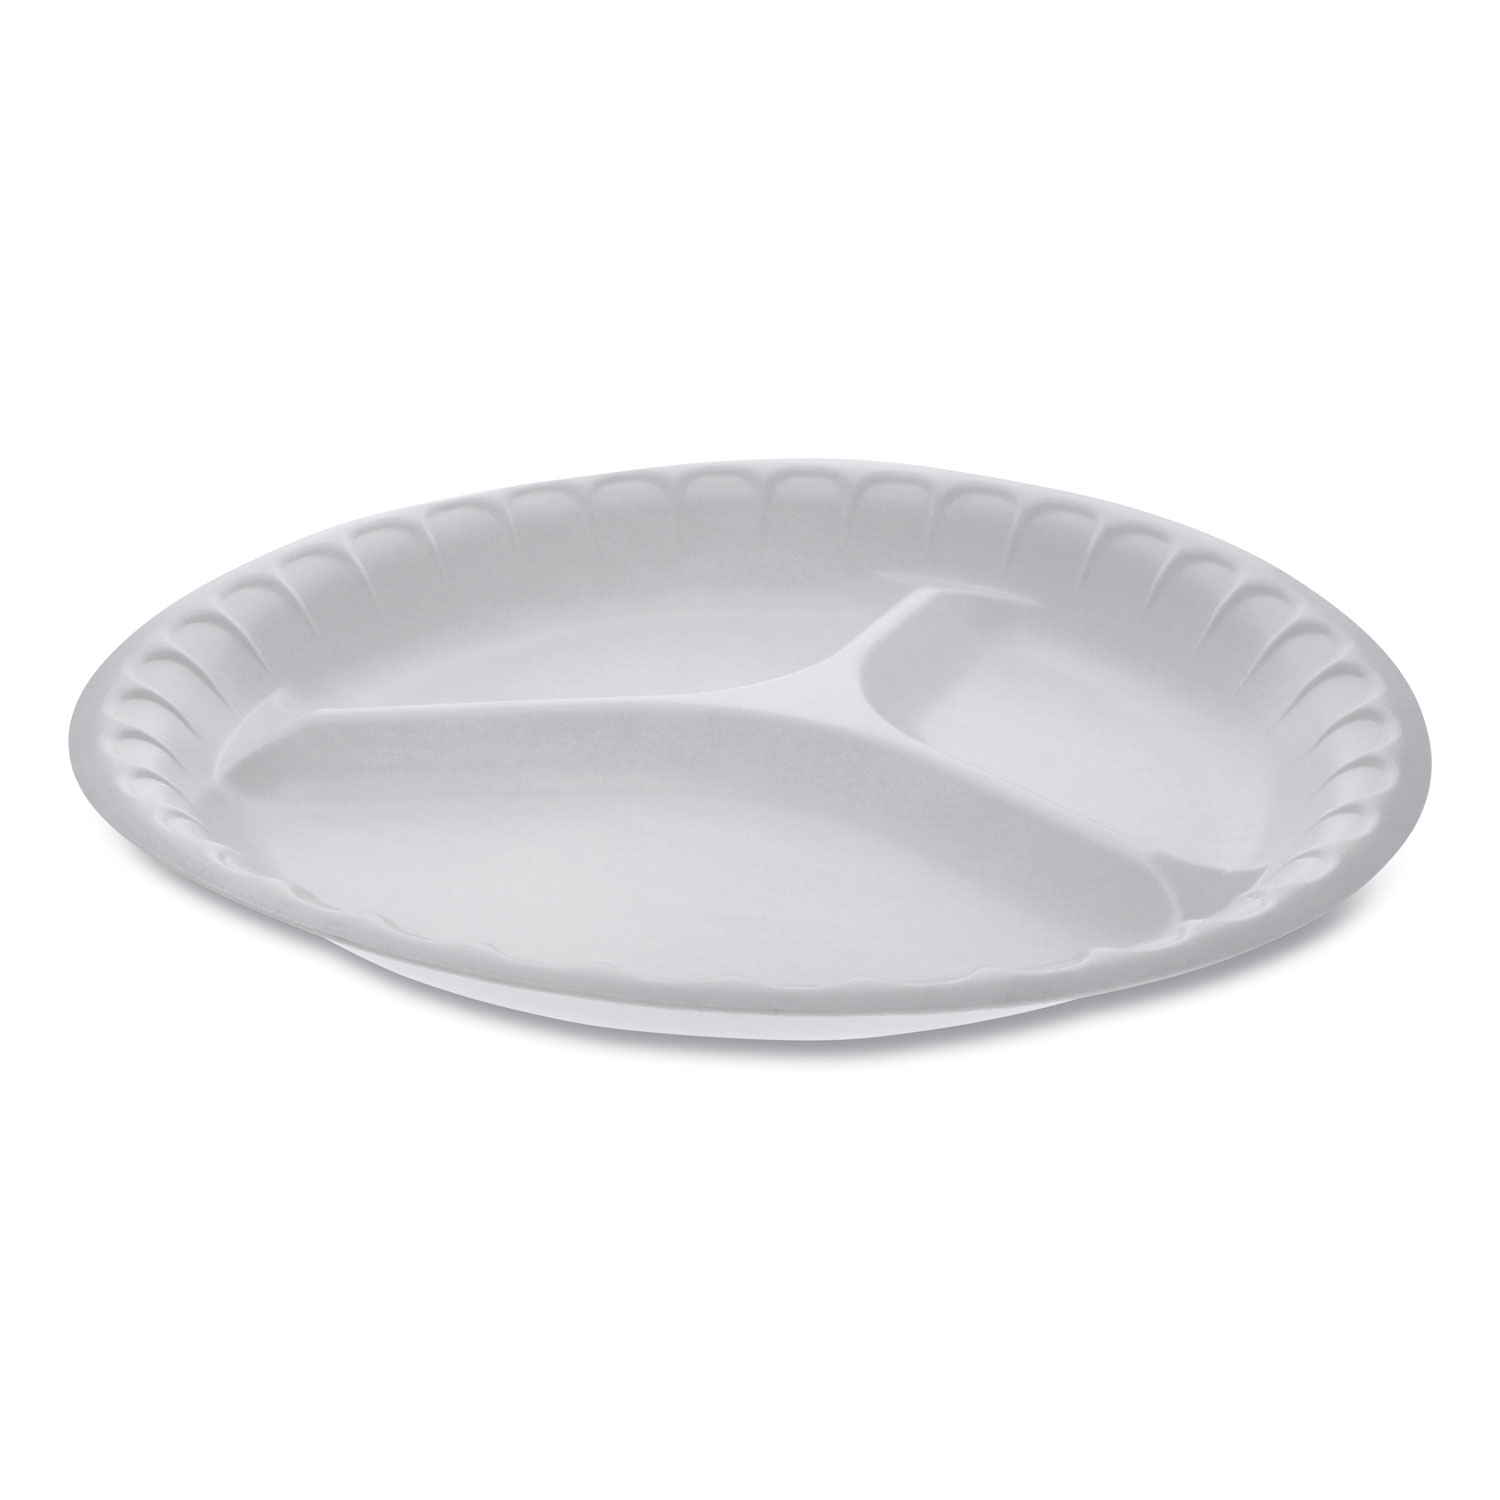 Pactiv Unlaminated Foam Dinnerware, 3-Compartment Plate, 10.25 Diameter, White, 540/Carton